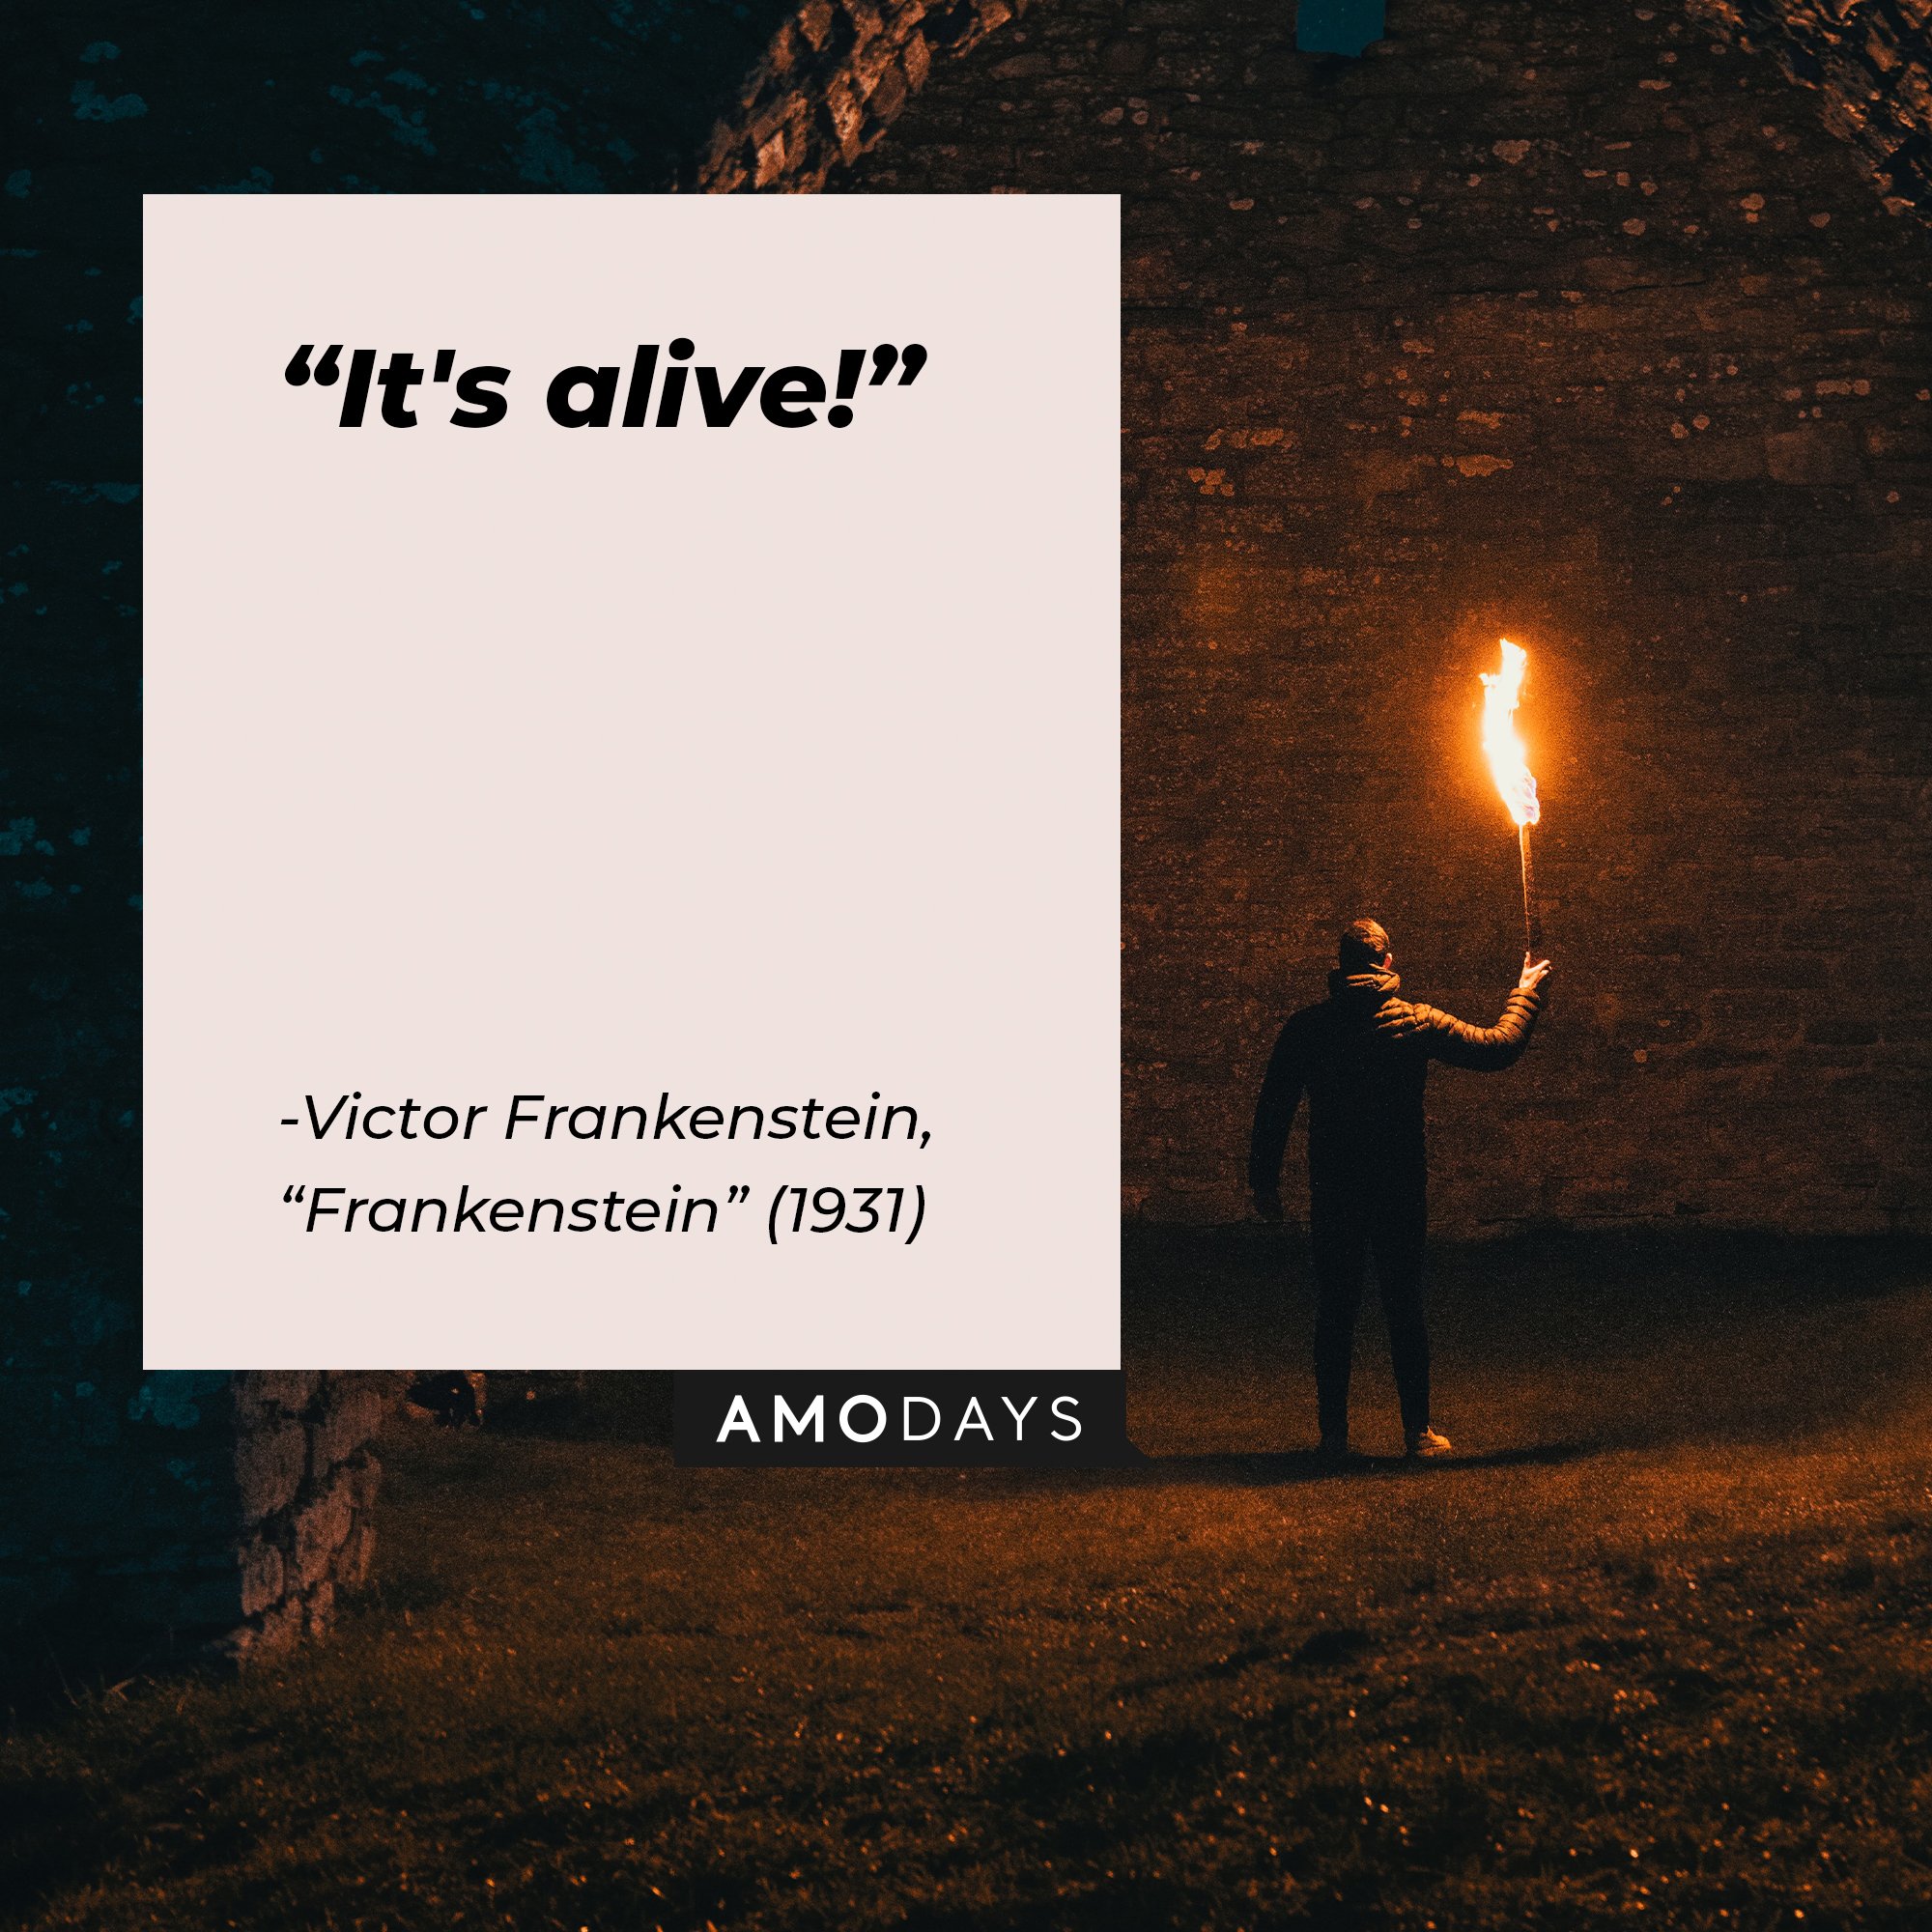 Victor Frankenstein’s quote from “Frankenstein’s” (1931): "It's alive!" | Image: AmoDays